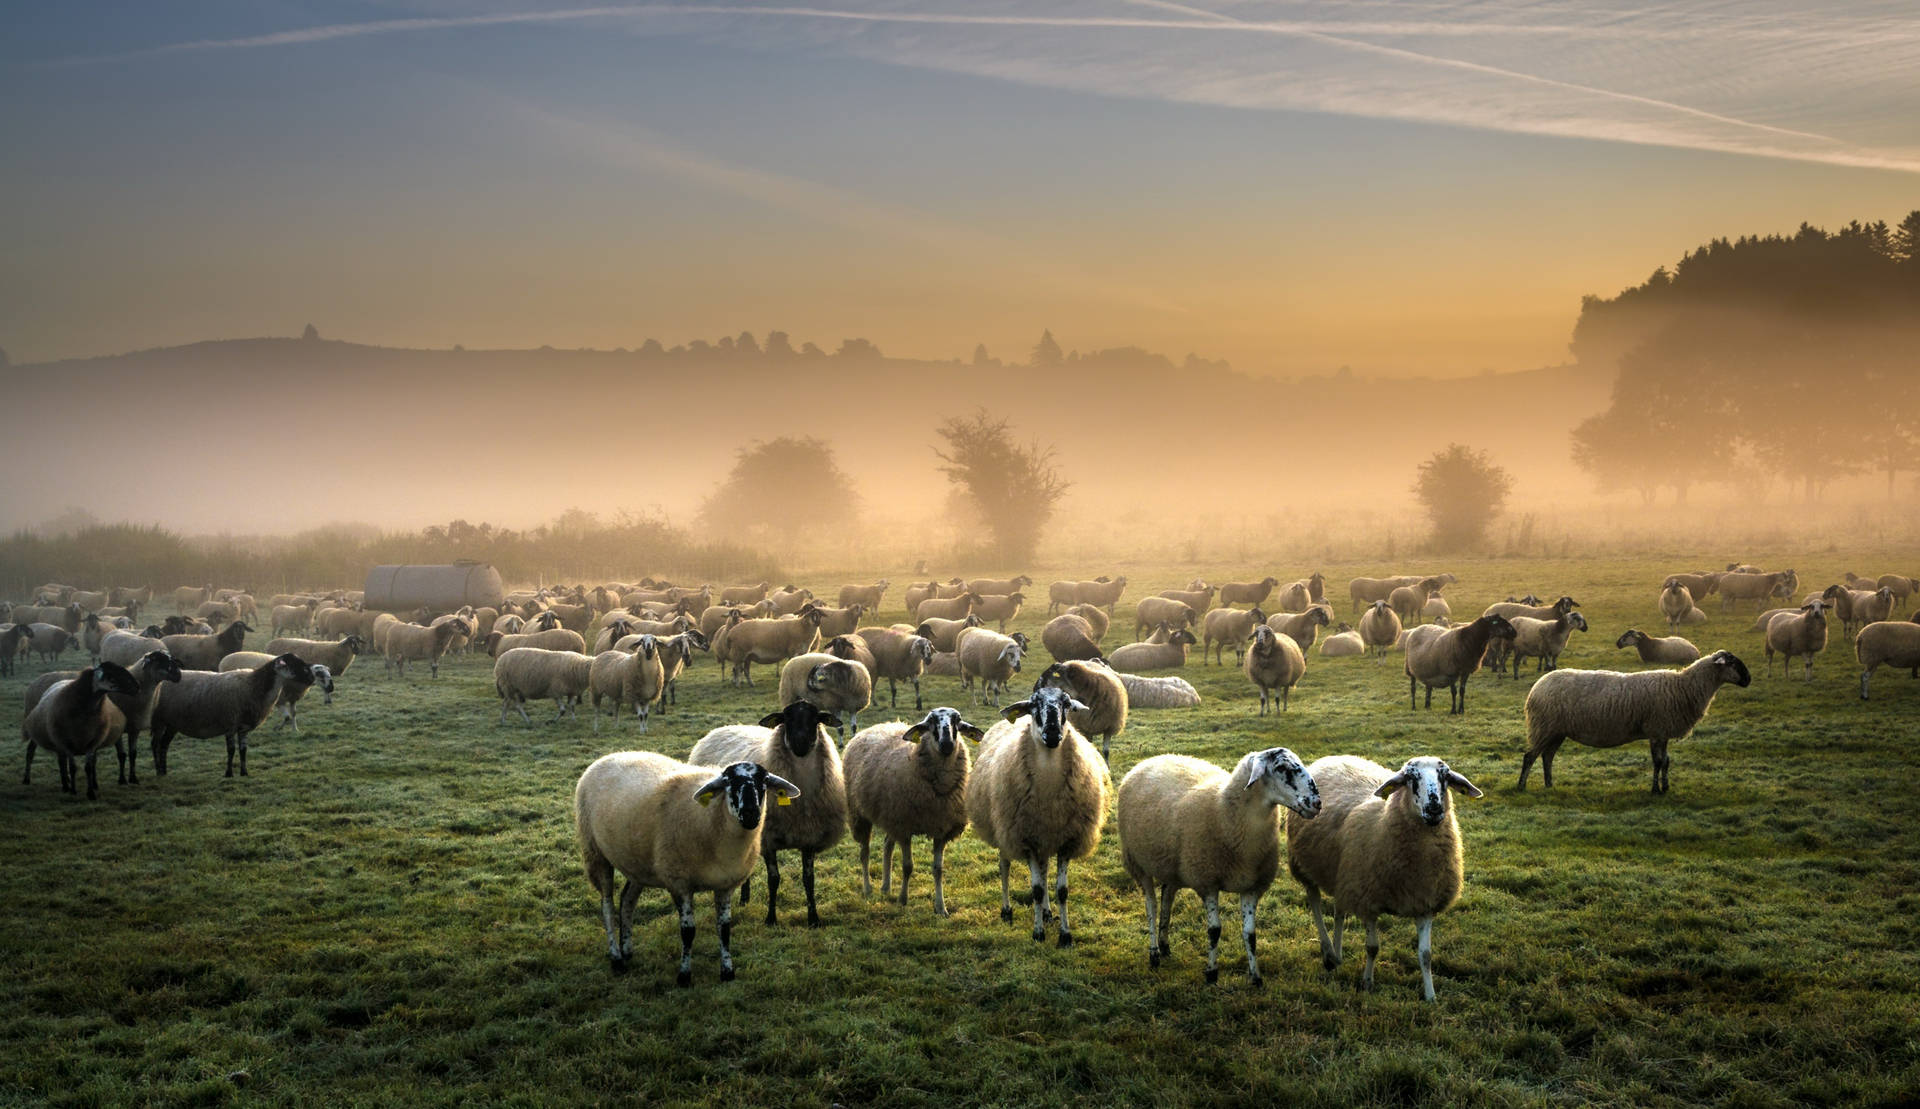 Sheep In Misty Grass Field Background